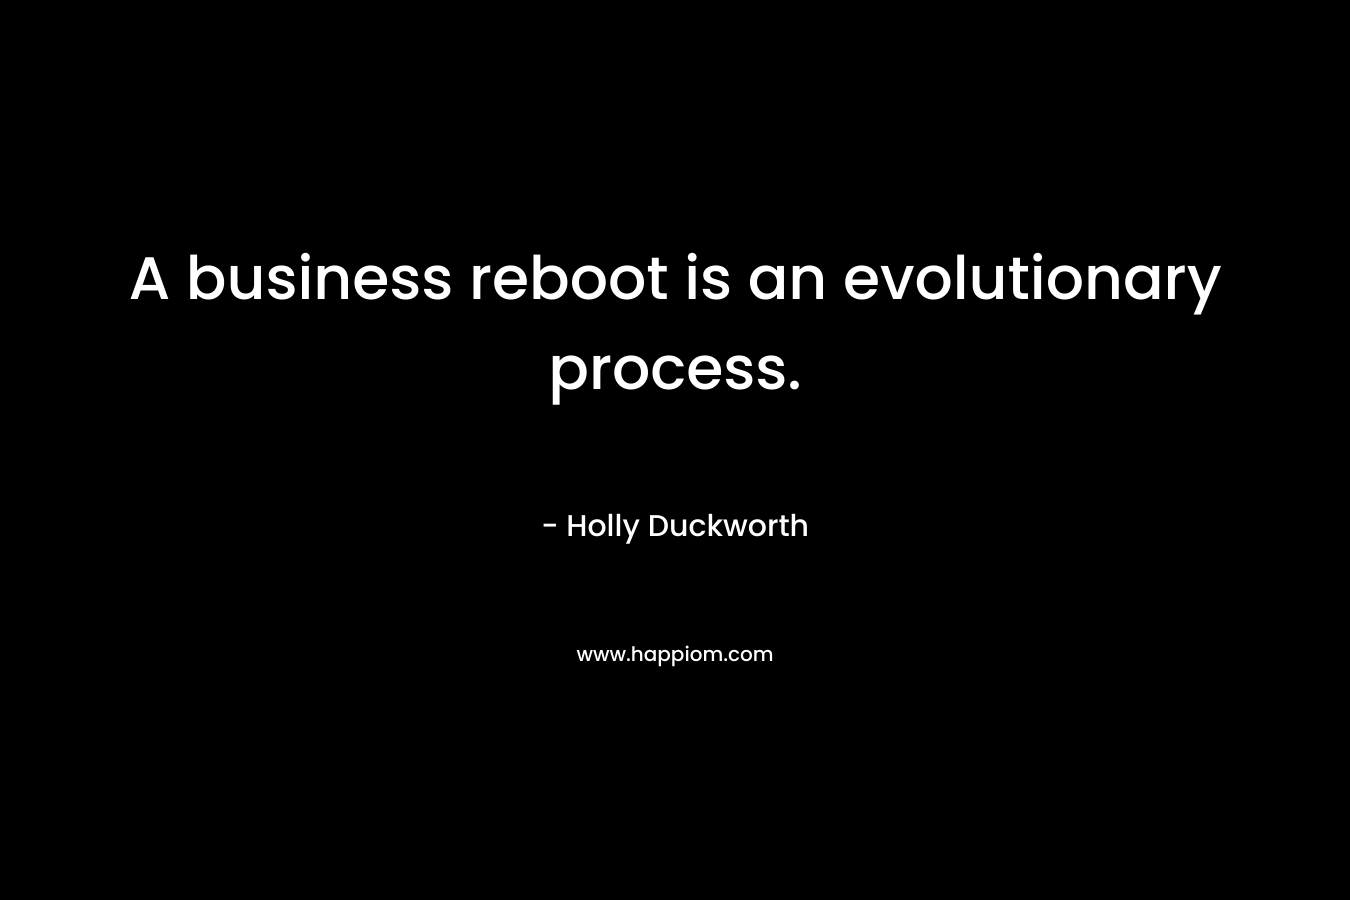 A business reboot is an evolutionary process.